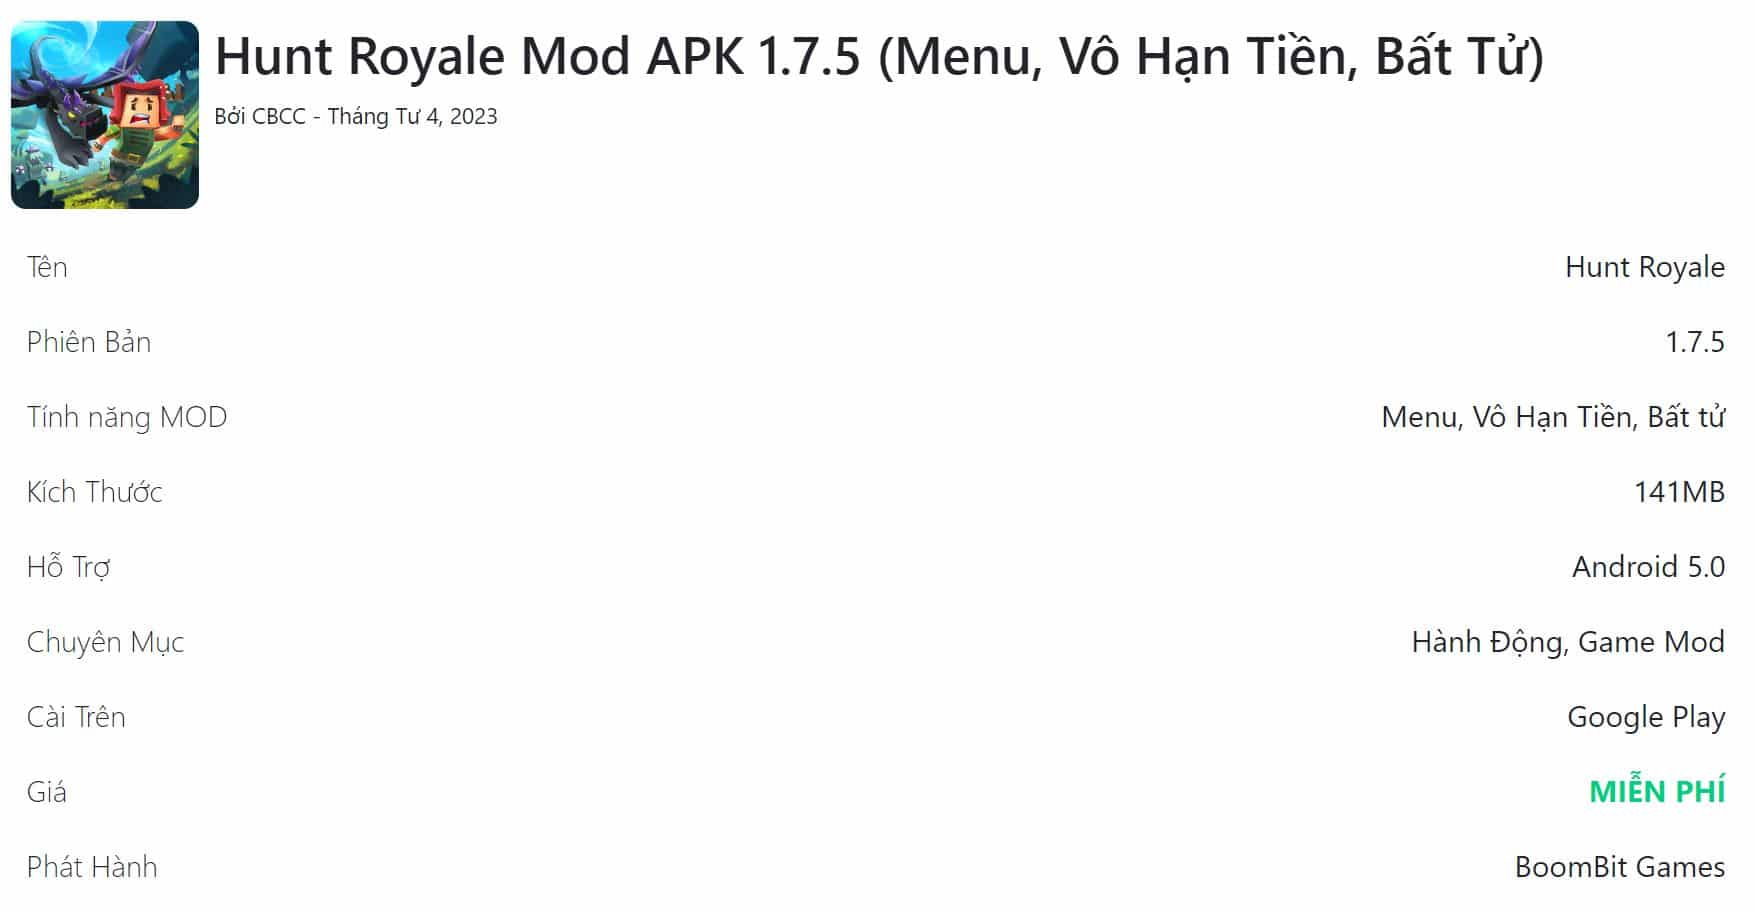 Hunt Royale Mod APK 1.7.5